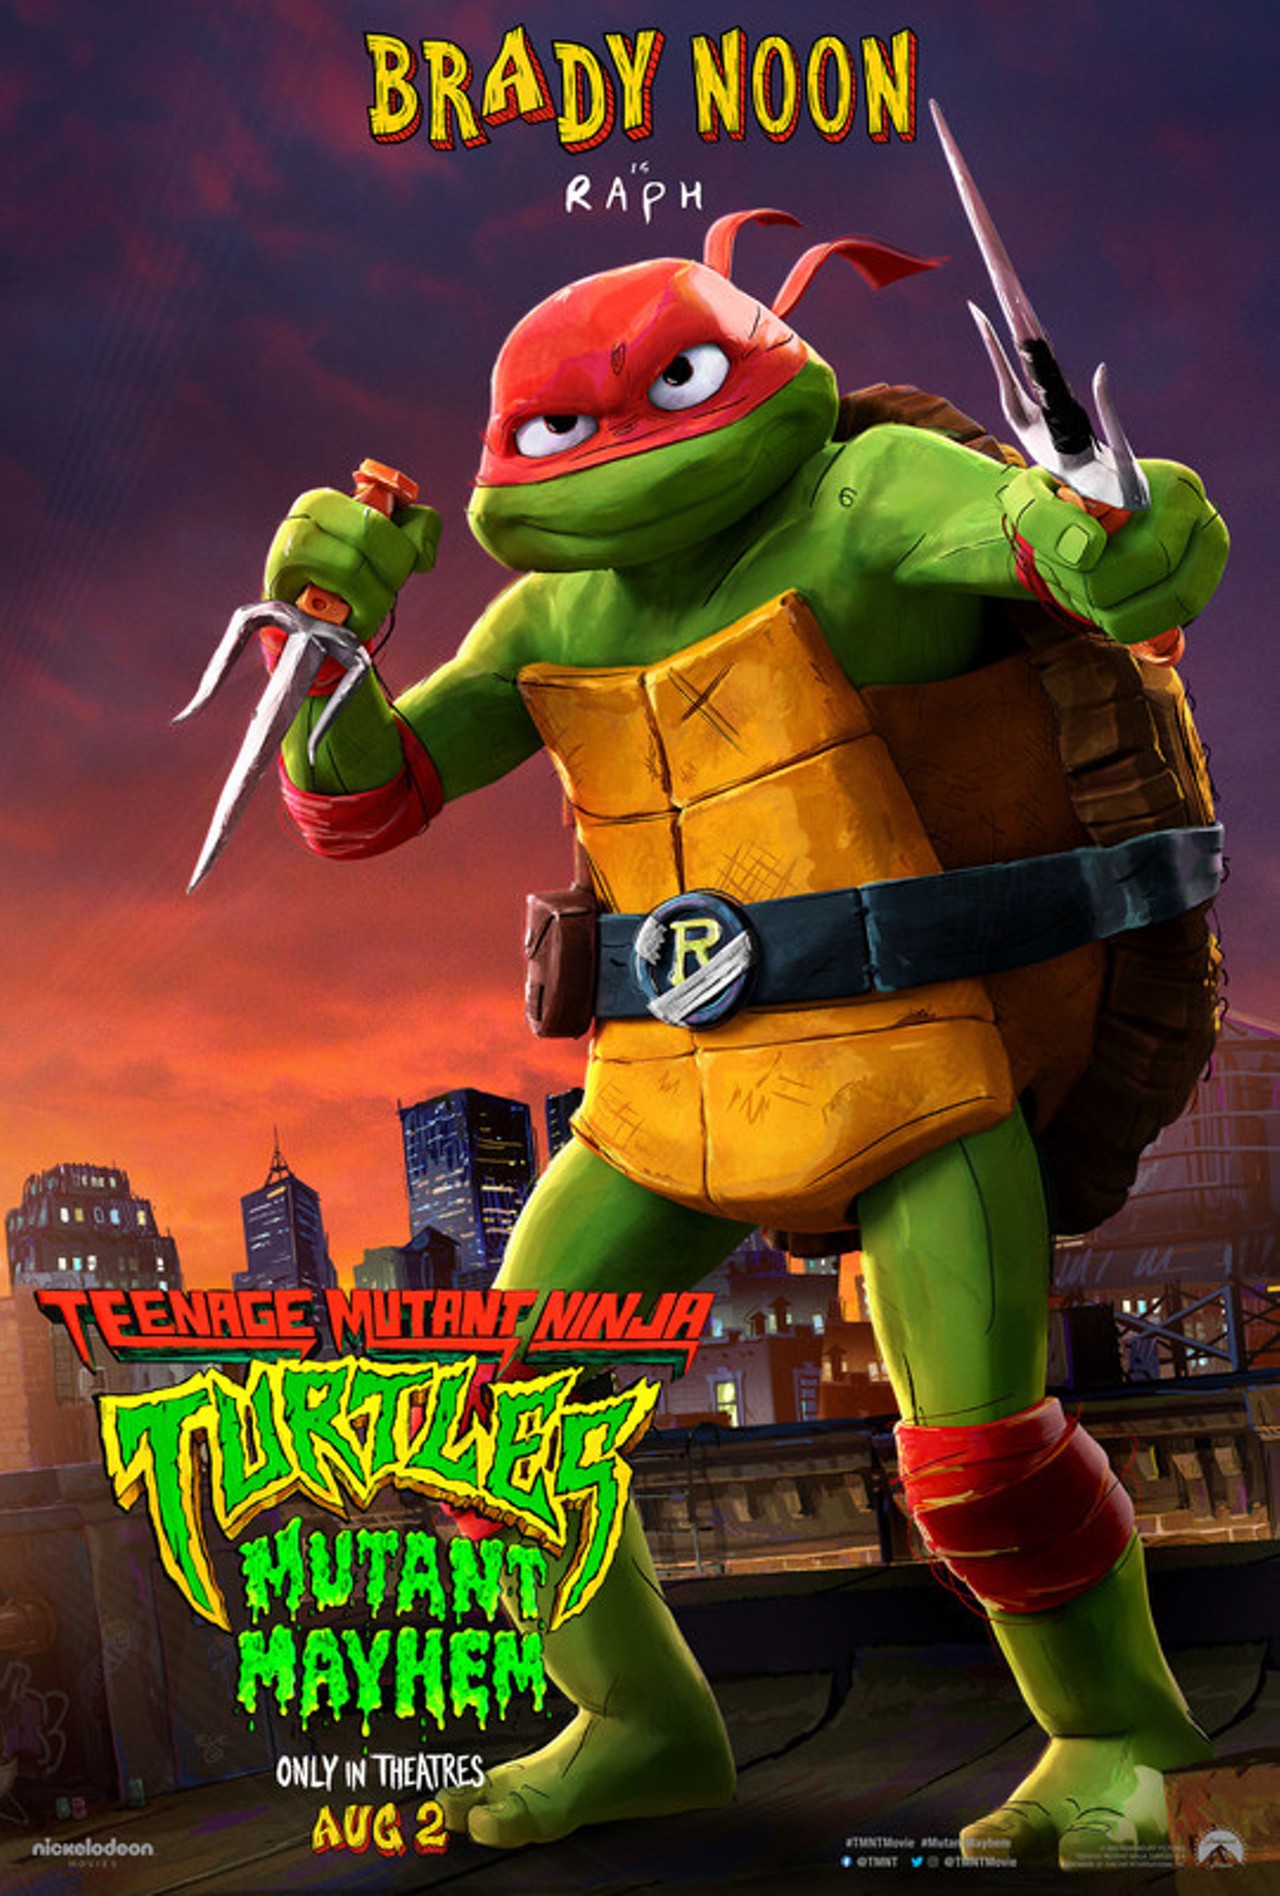 https://media2.fdncms.com/tucsonweekly/imager/u/zoom/34411853/teenage-mutant-ninja-turtles-mutant-mayhem.jpg?cb=1690272936